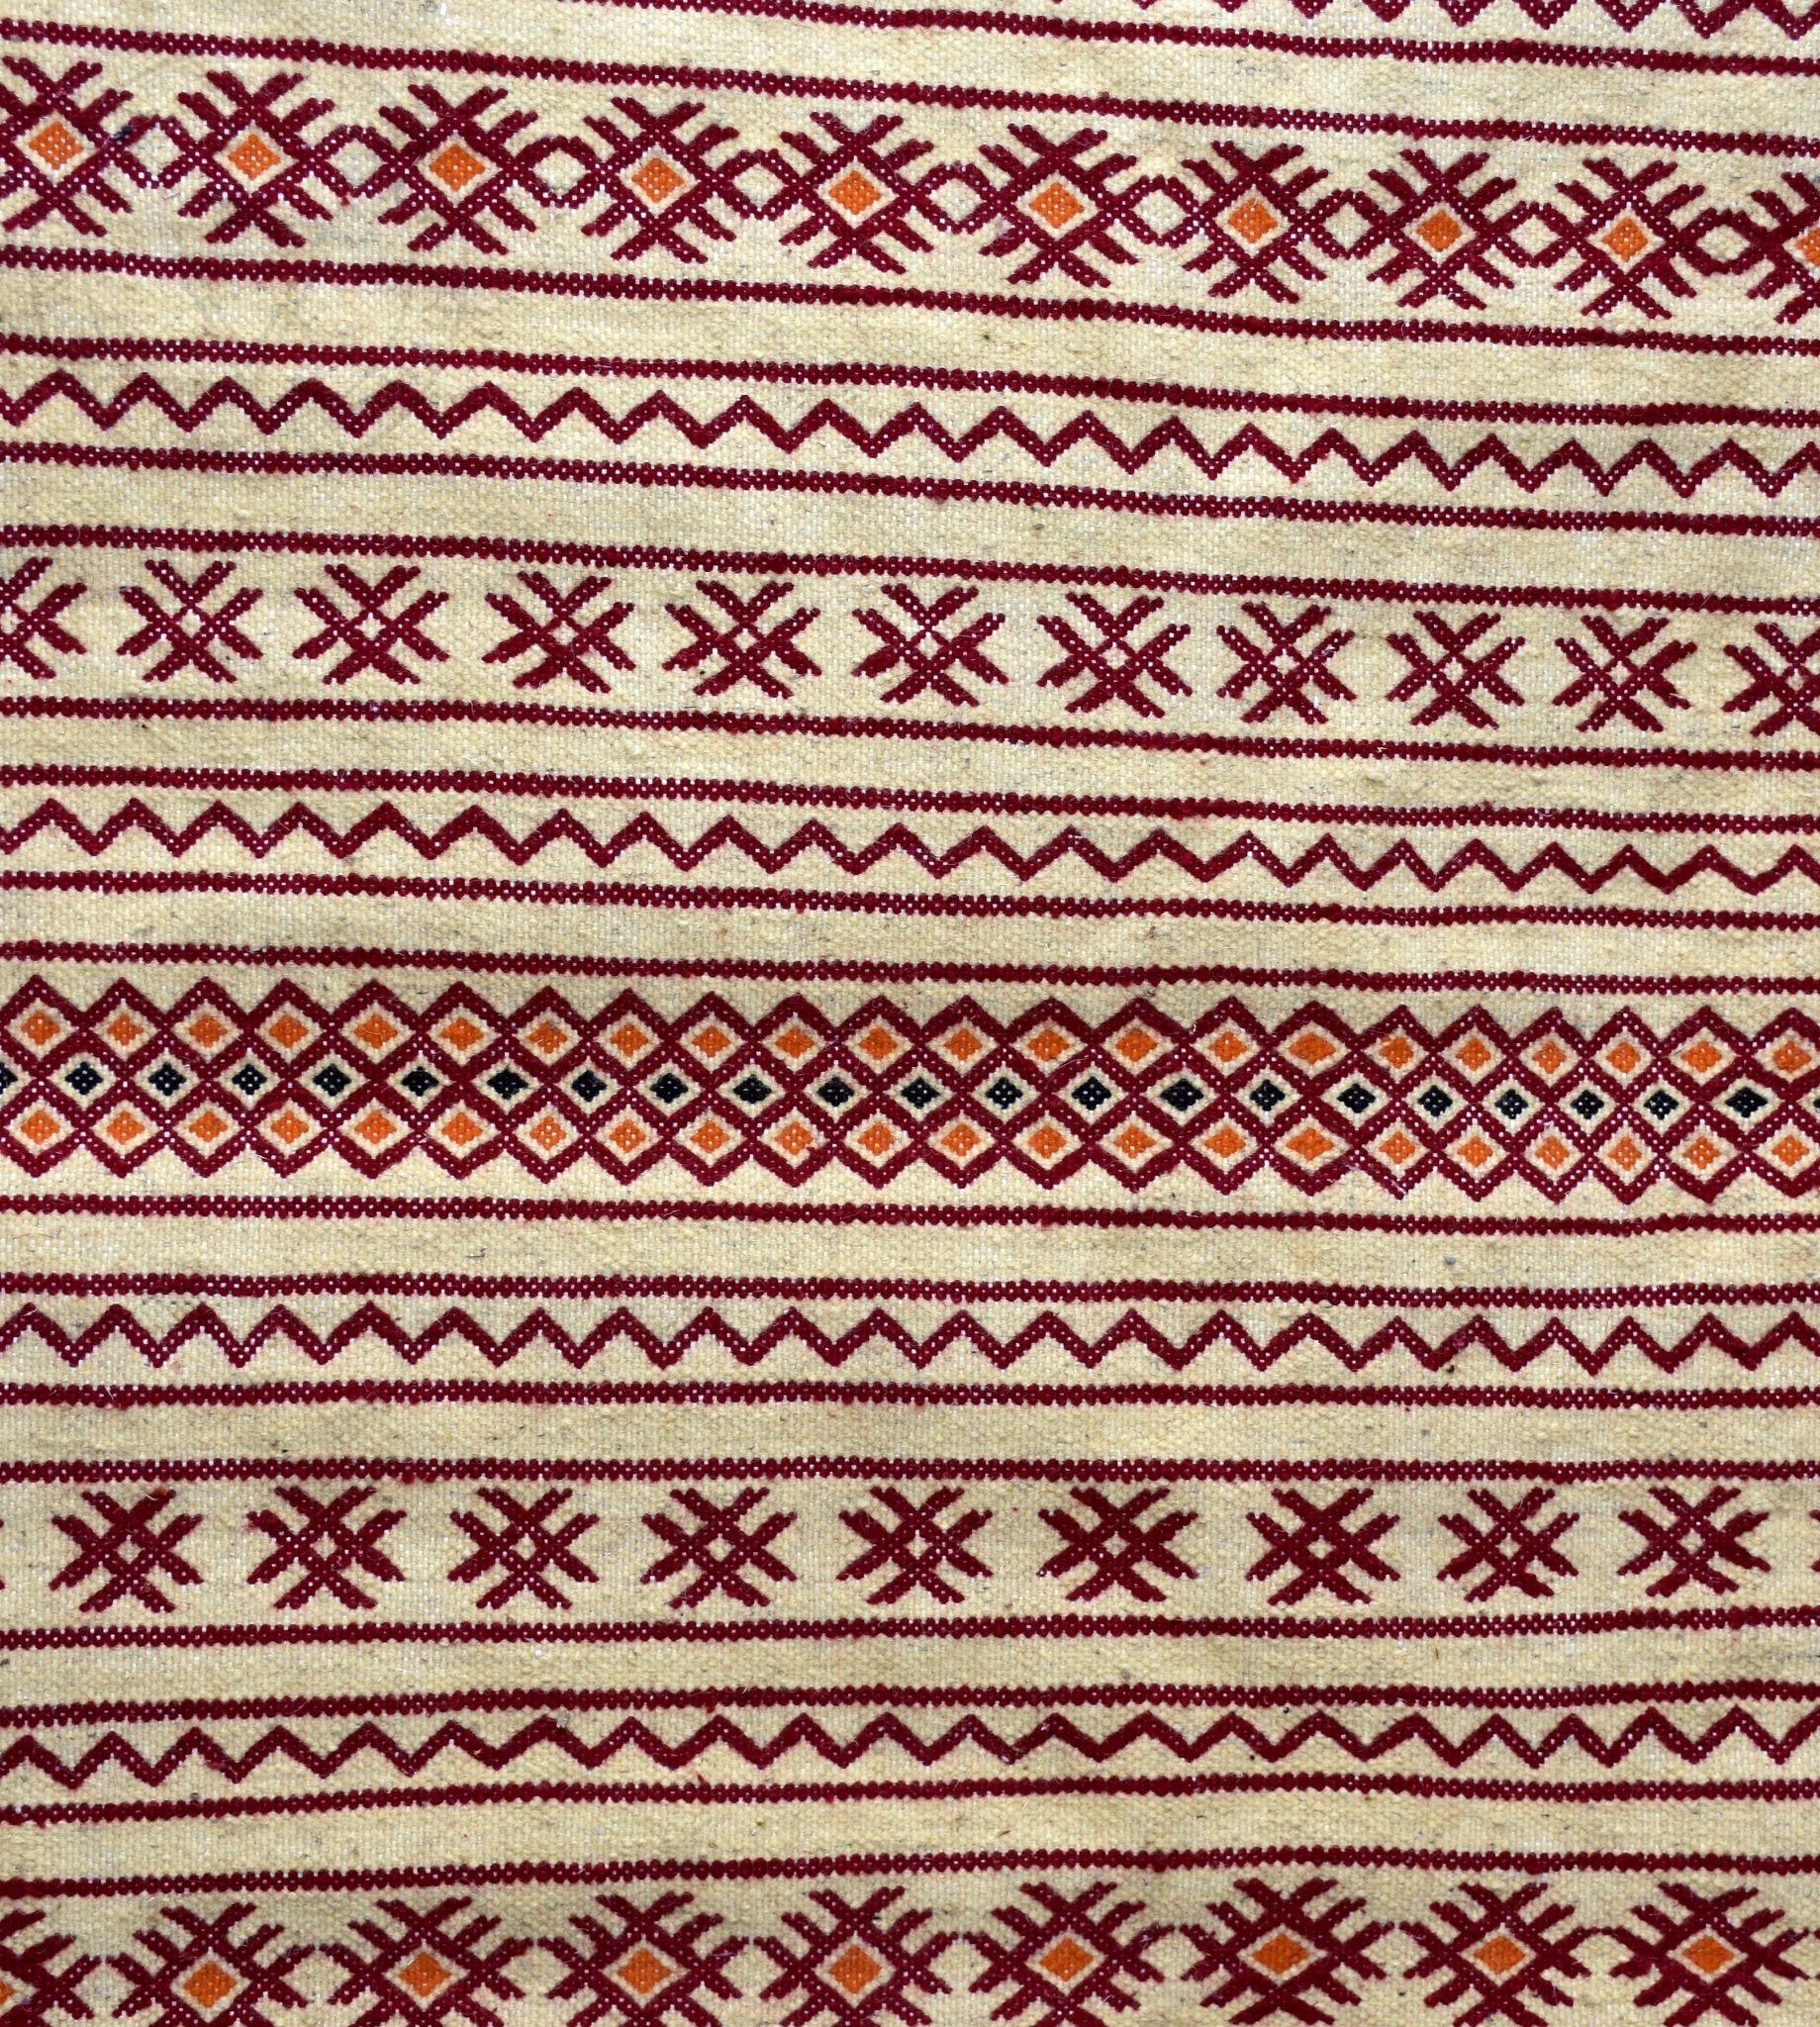 Flatweave kilim hanbal Moroccan rug - 6.73 x 10.18 ft / 205 x 310 cm - Berbers Market